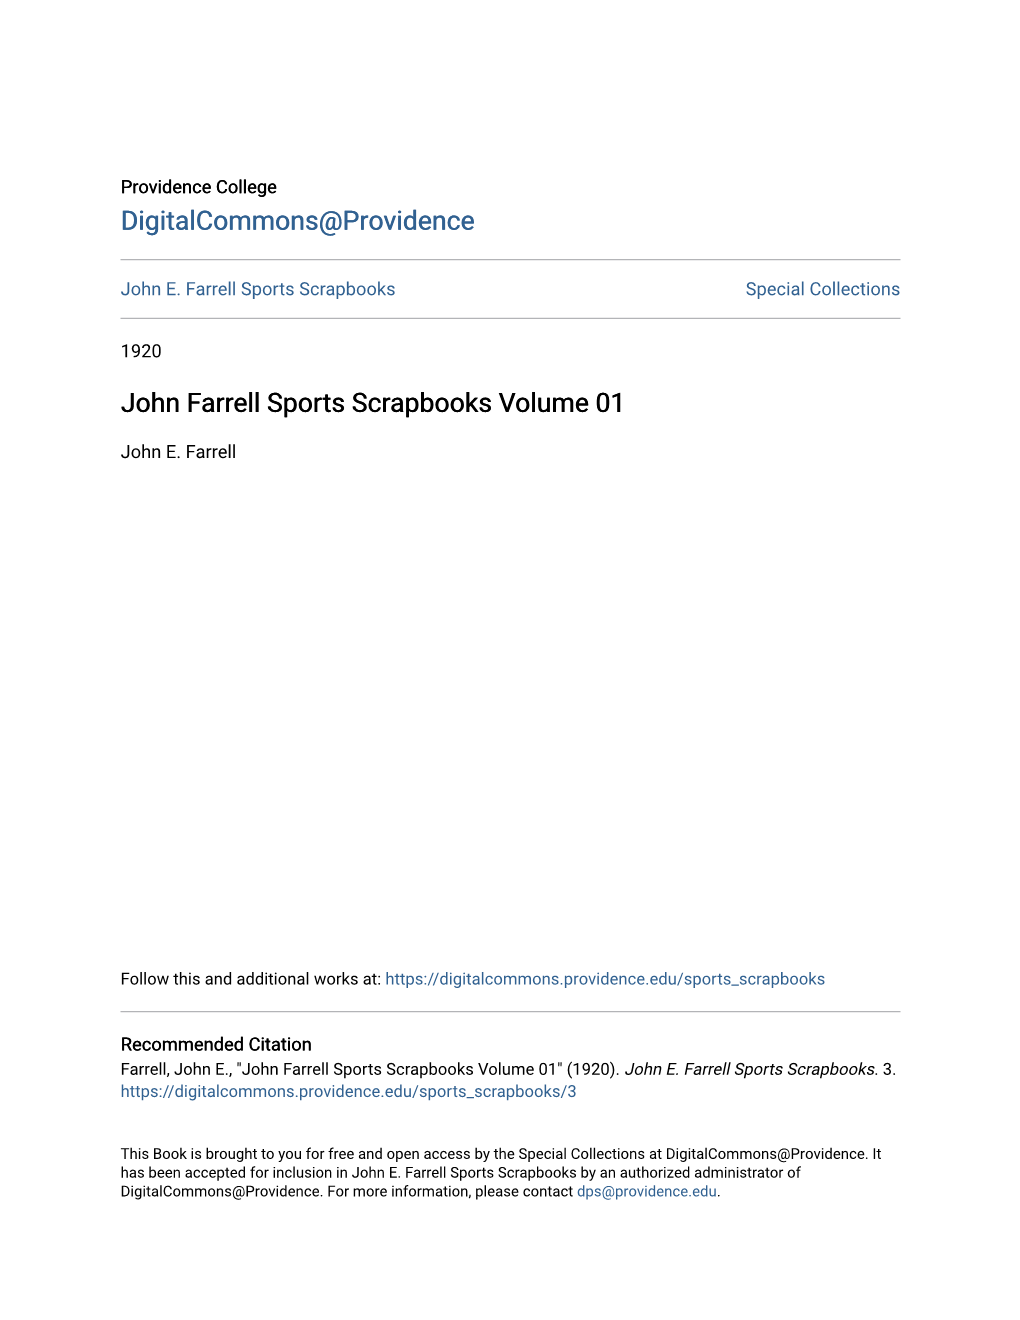 John Farrell Sports Scrapbooks Volume 01